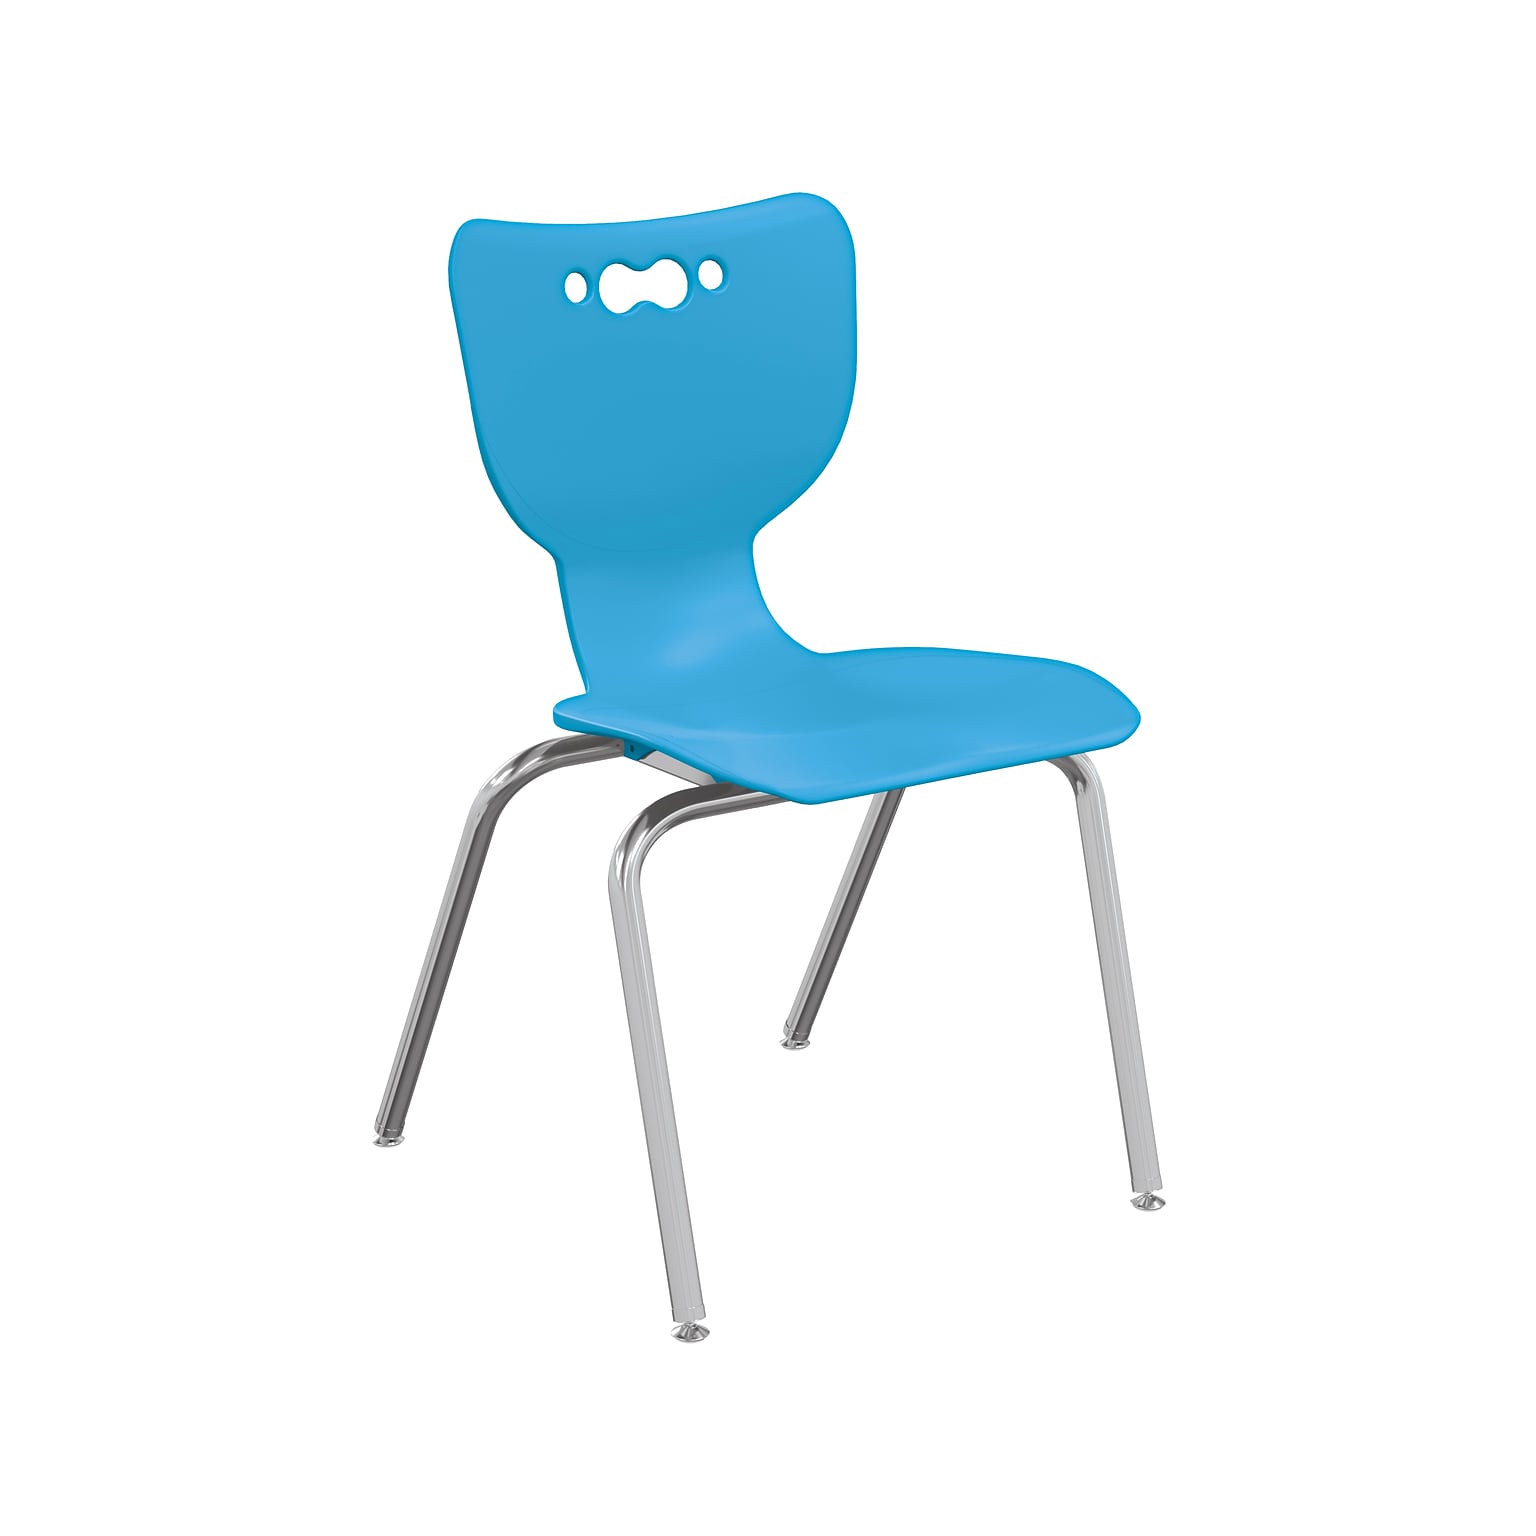 MooreCo Hierarchy 4-Leg Plastic School Chair, Chrome/Blue (53318-1-BLUE-NA-CH)